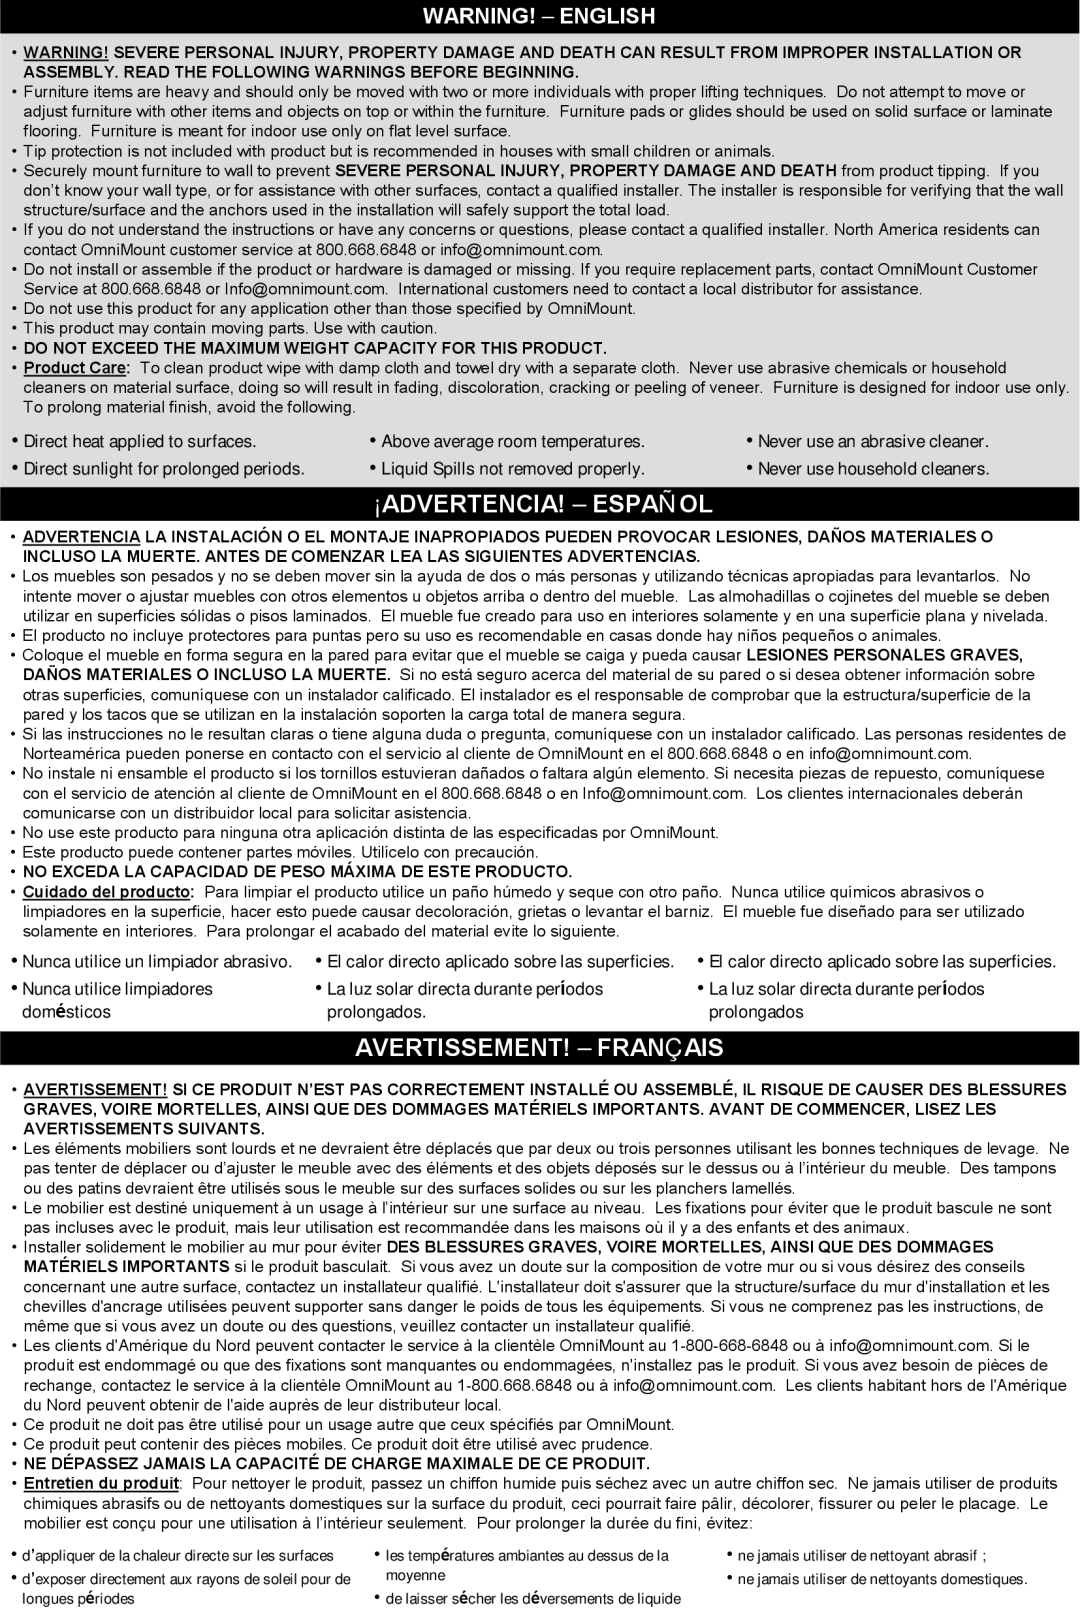 Omnimount 10270, ECHOA3 instruction manual ¡Advertencia! - Español, Avertissement! - Français, Warning! - English 